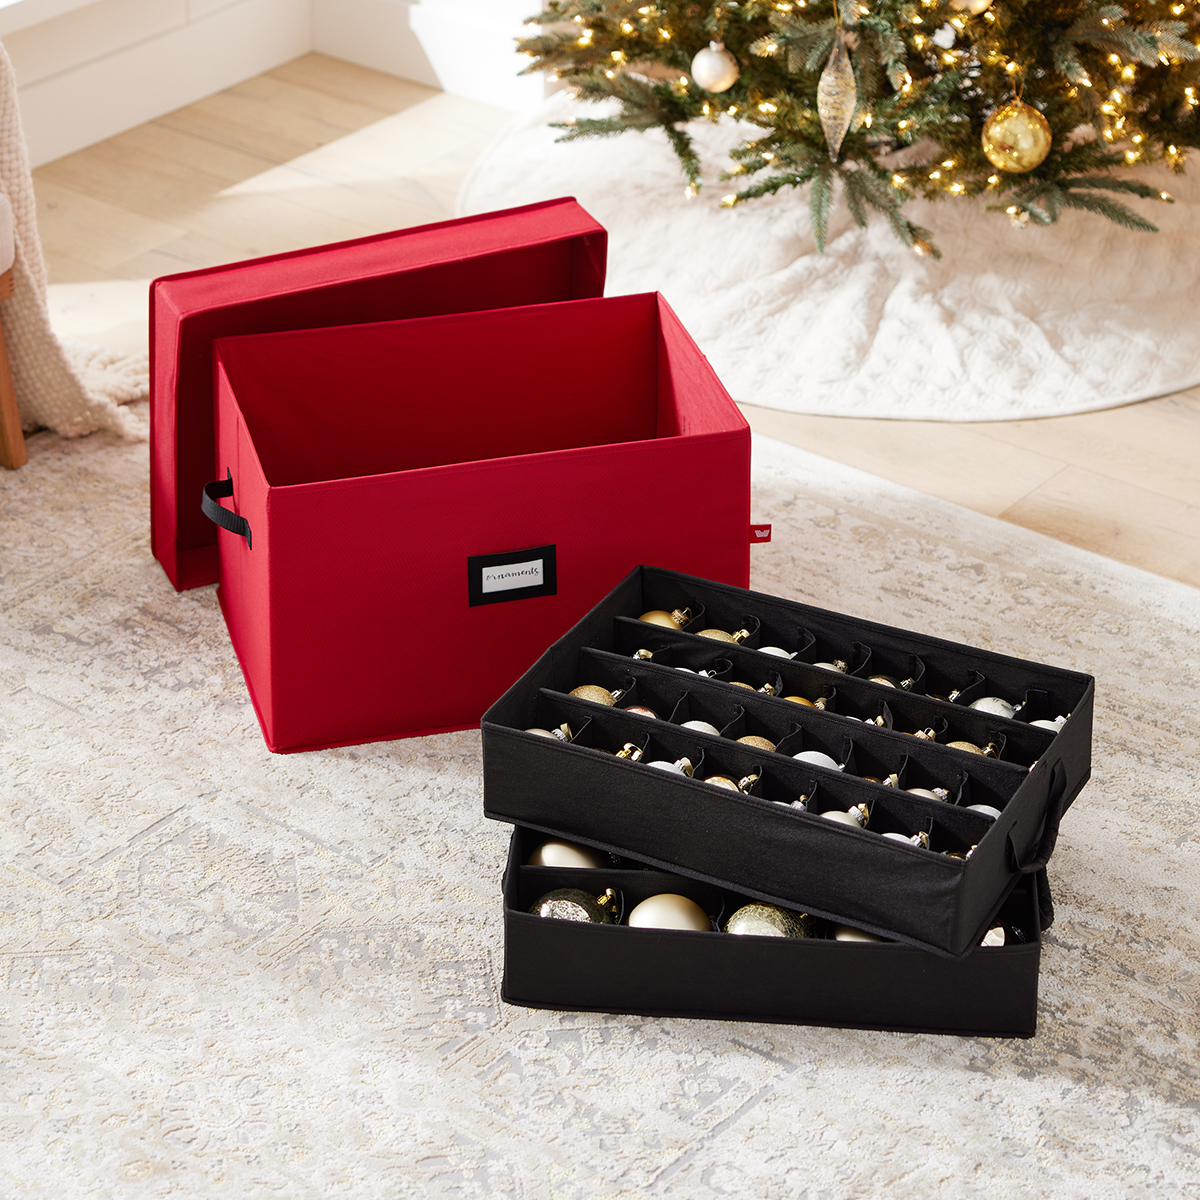 Ultimate Christmas Storage - Premium Ornament Storage Box Review